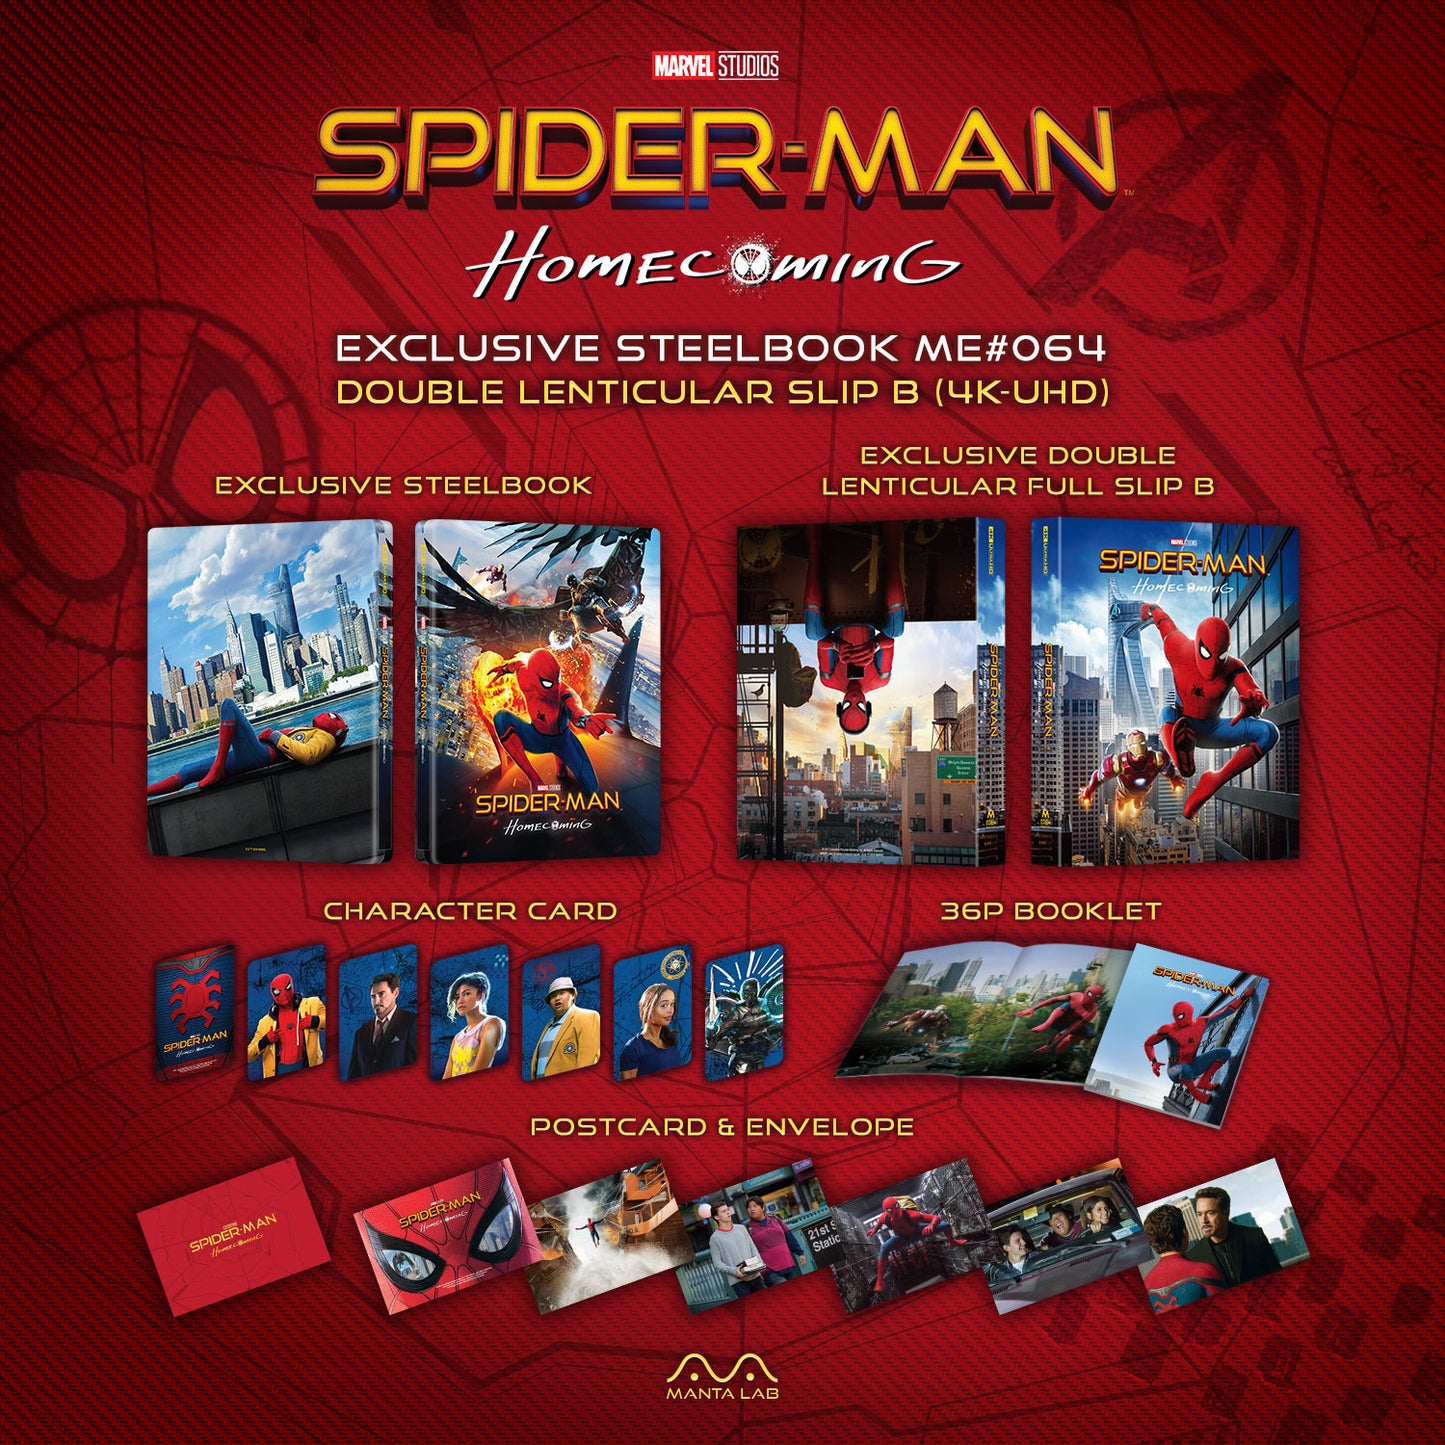 Spider-Man: Homecoming 4K Blu-ray Steelbook Manta Lab Exclusive ME#64 One Click Box Set - PREORDER